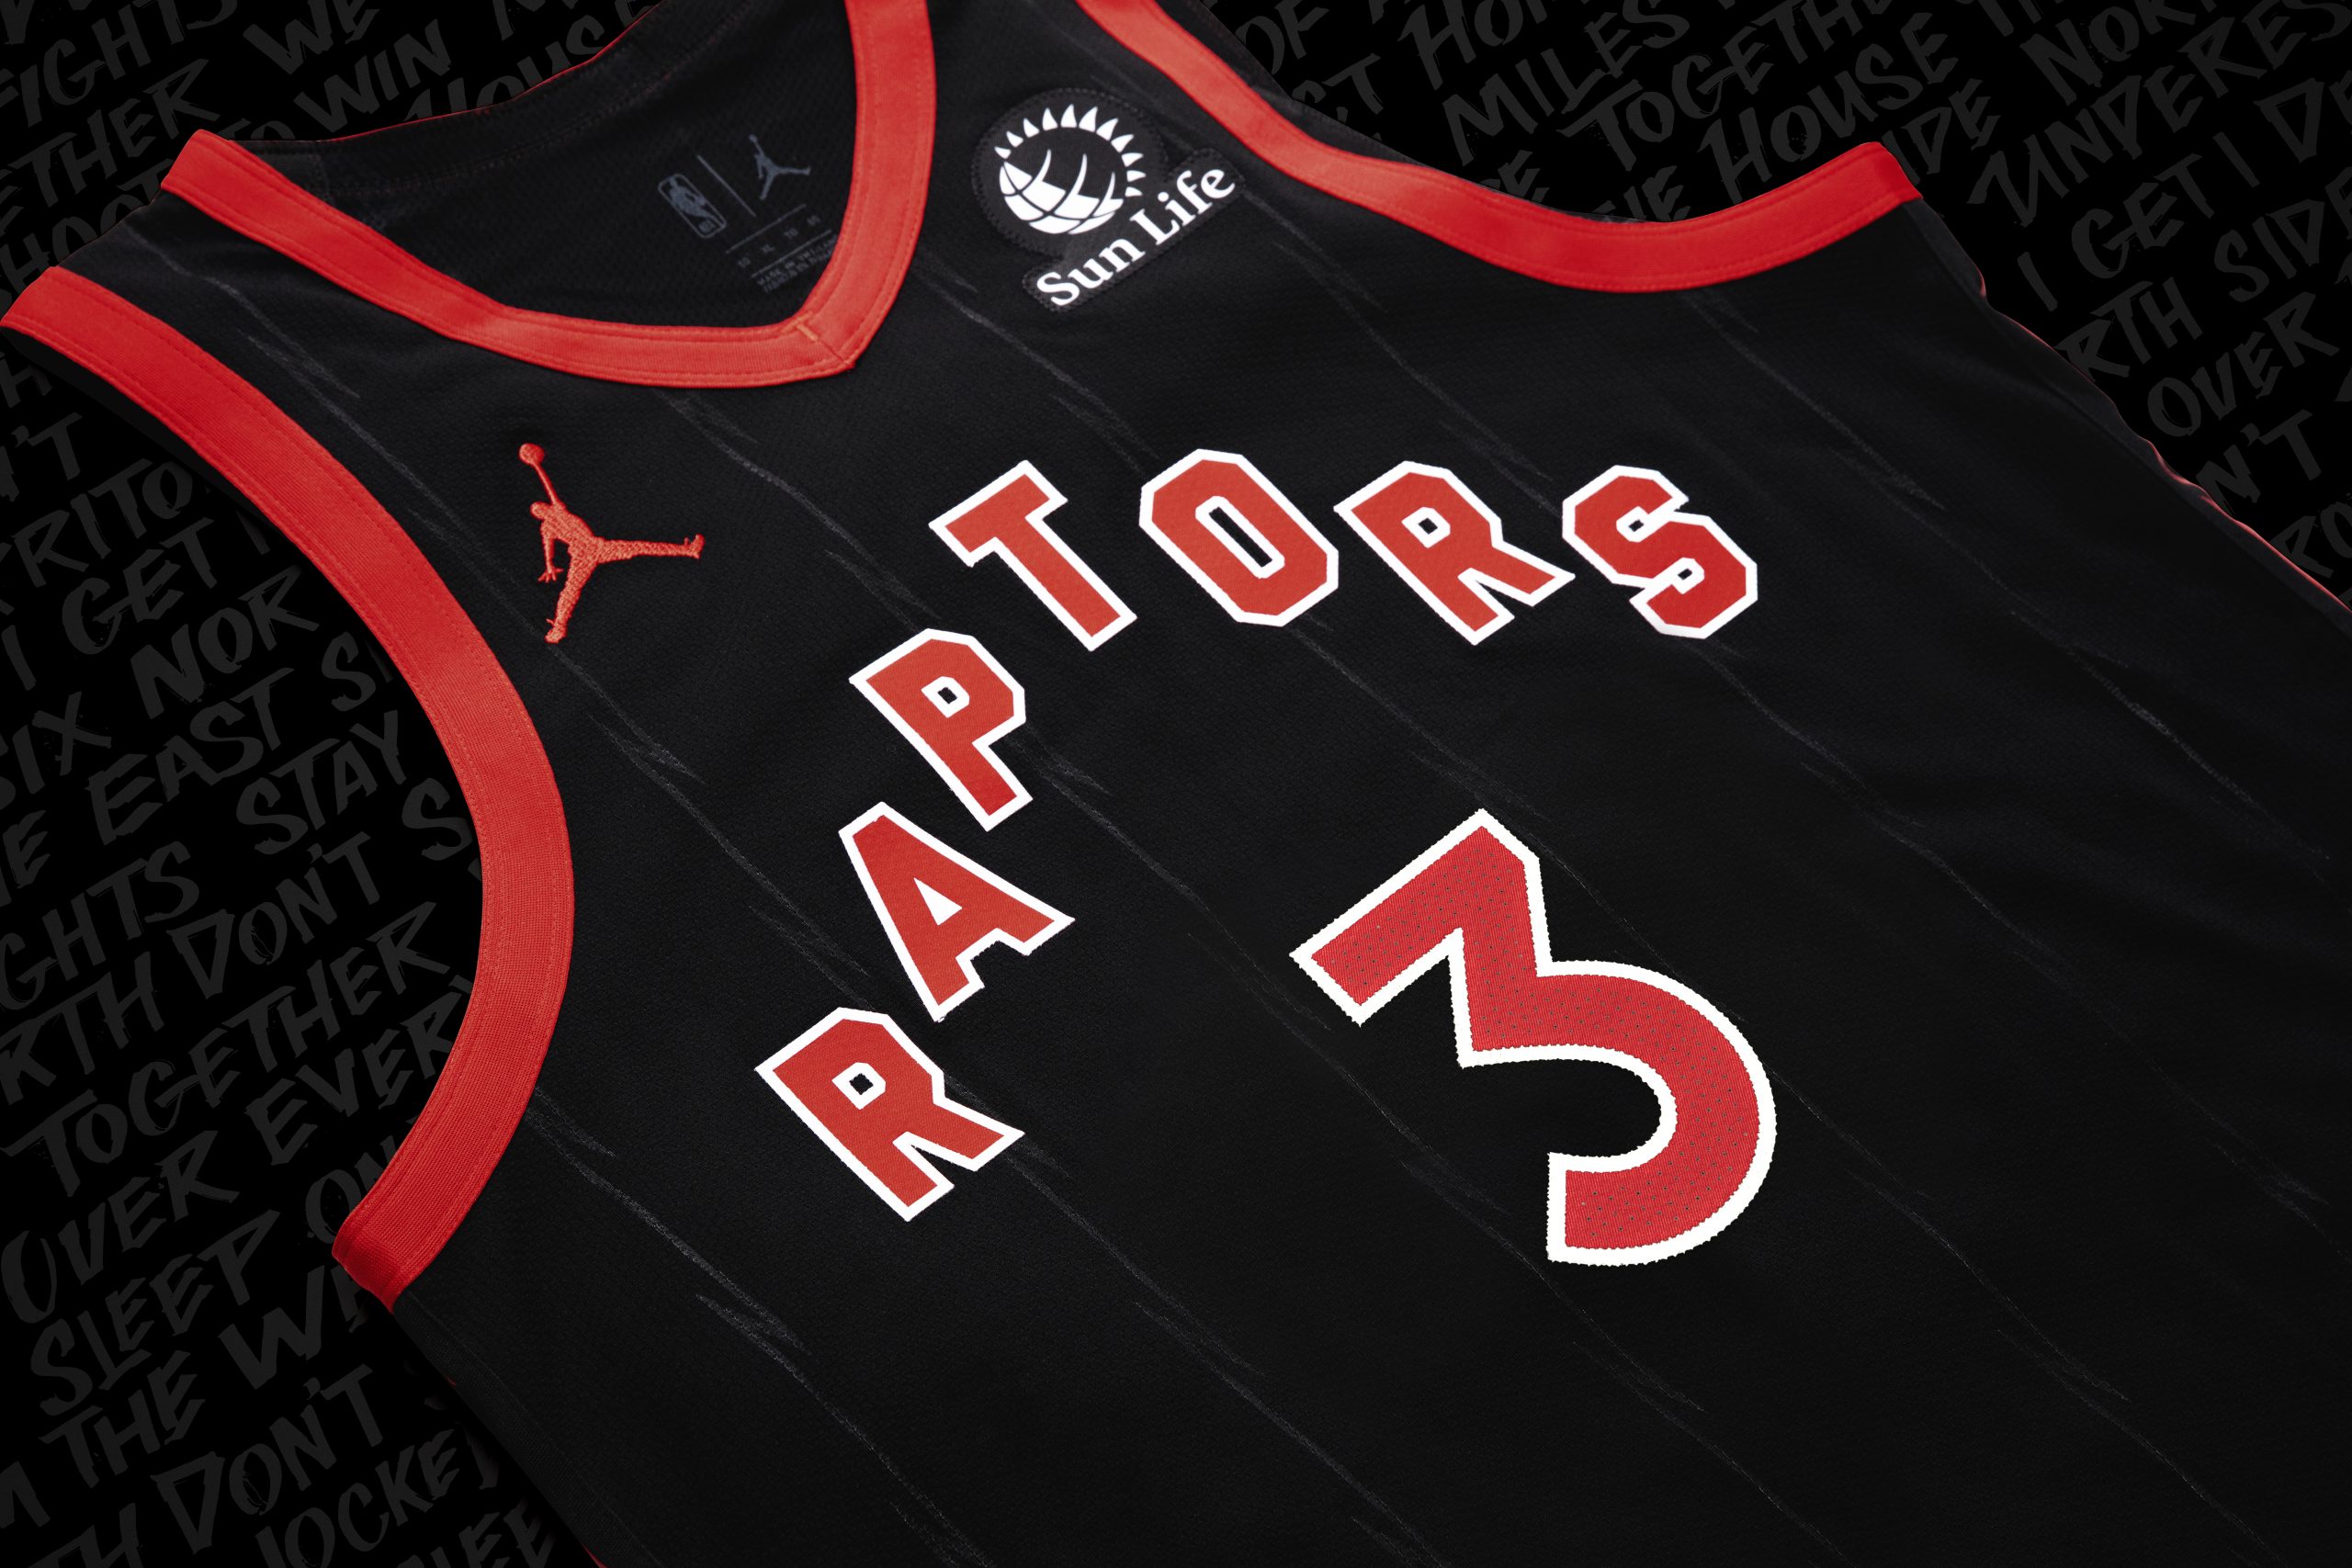 Toronto Raptors unveil three new uniforms, tease two more